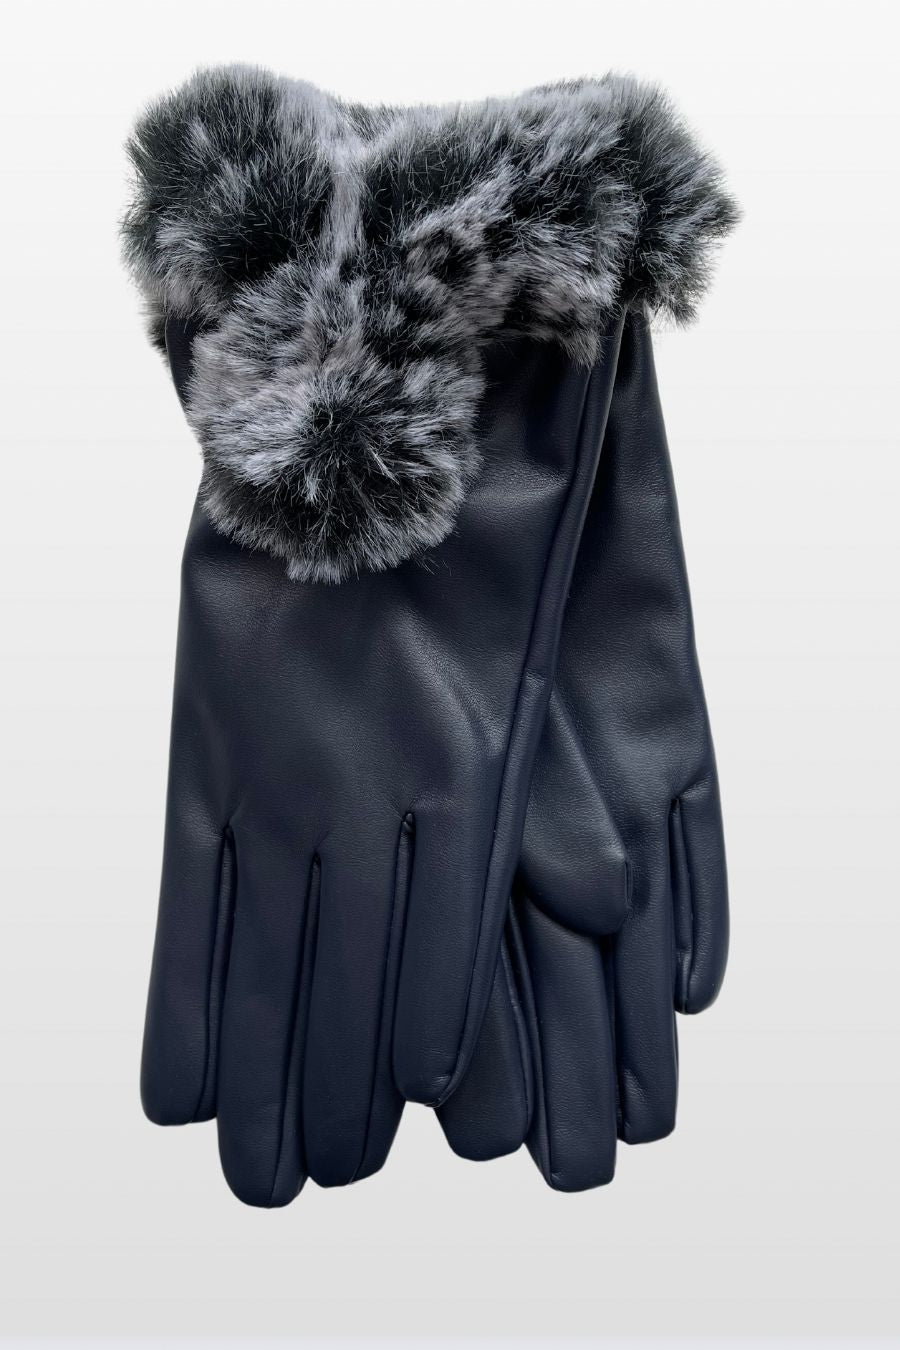 Faux Fur trim Vegan Leather Glove